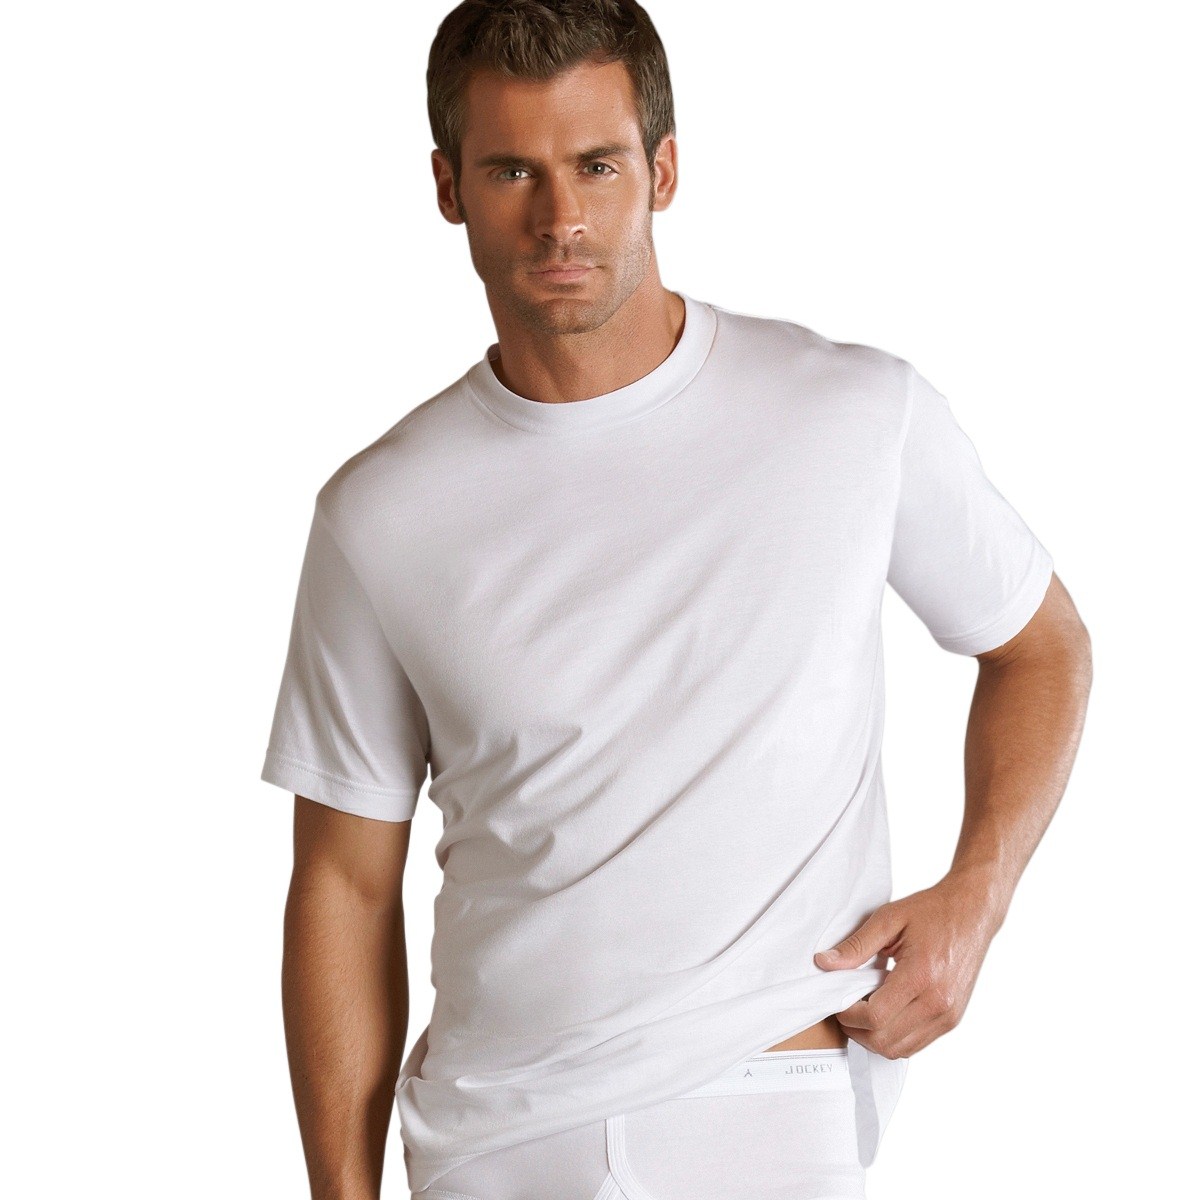 Jockey Classic T-Shirt - T-shirts - Clothing - Timarco.co.uk